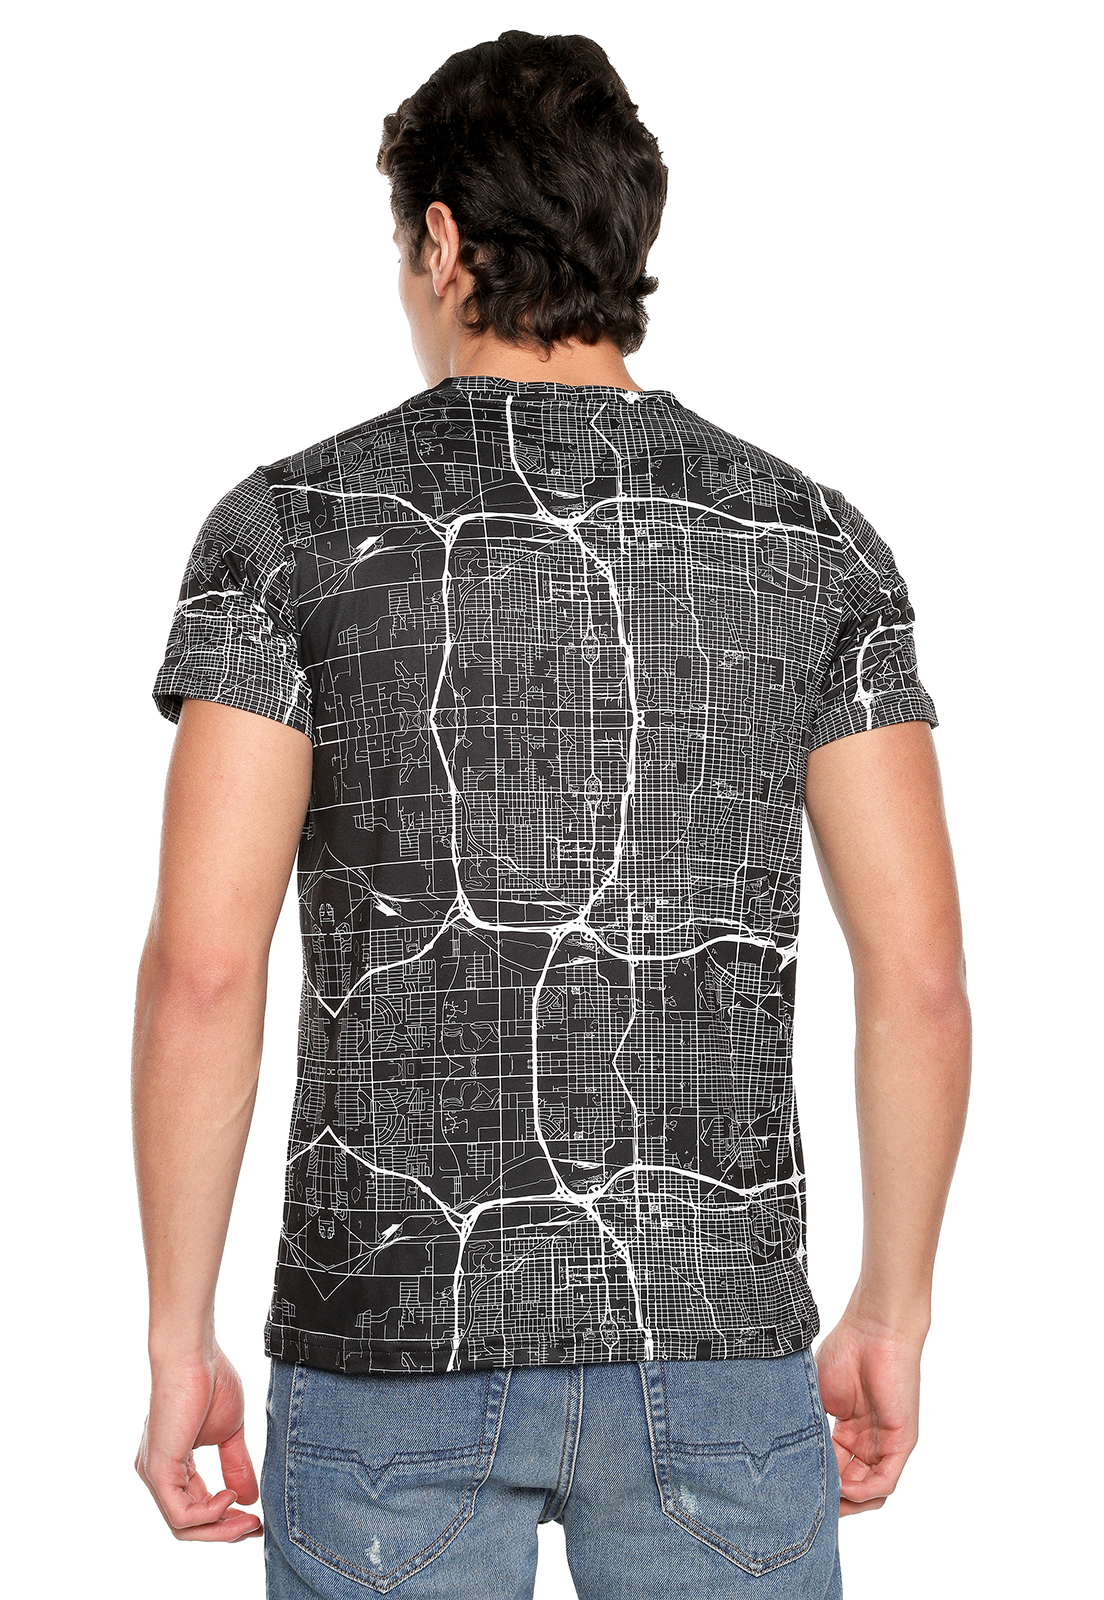 89 Com 20download - Camiseta para hombre sublimada route - Rachid Style